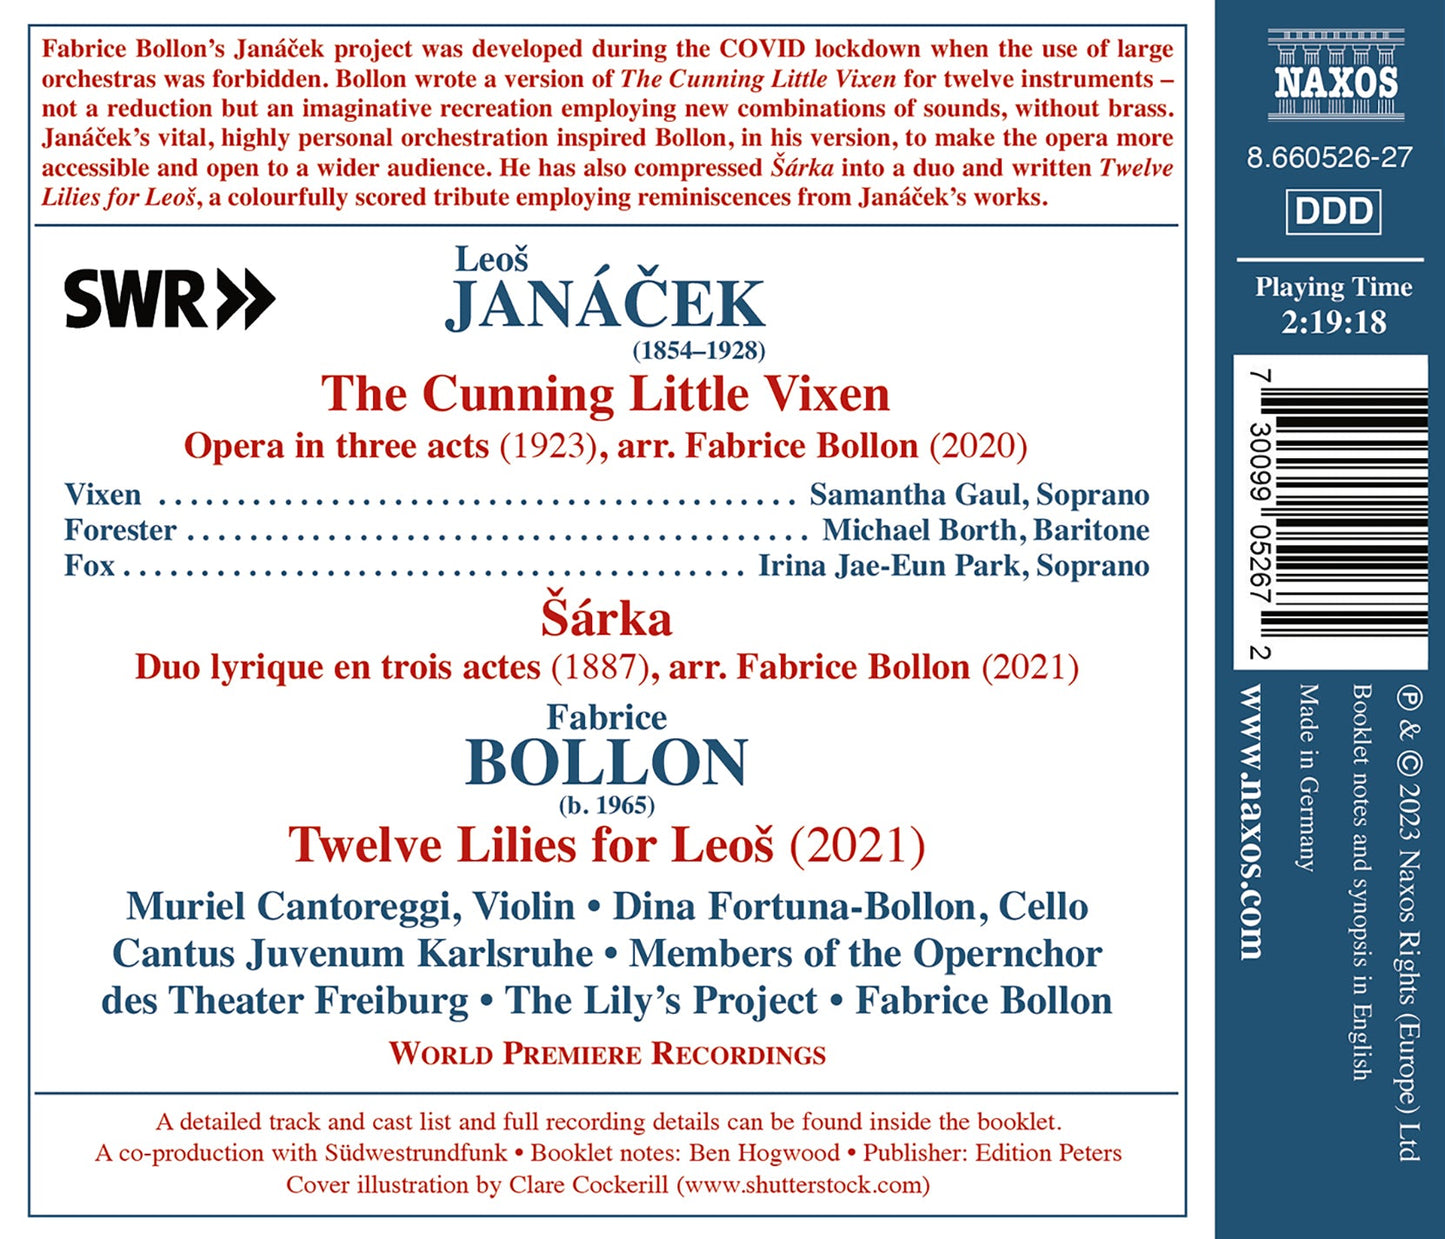 Janacek: The Cunning Little Vixen; Sarka; Bollon: Twelve Lil